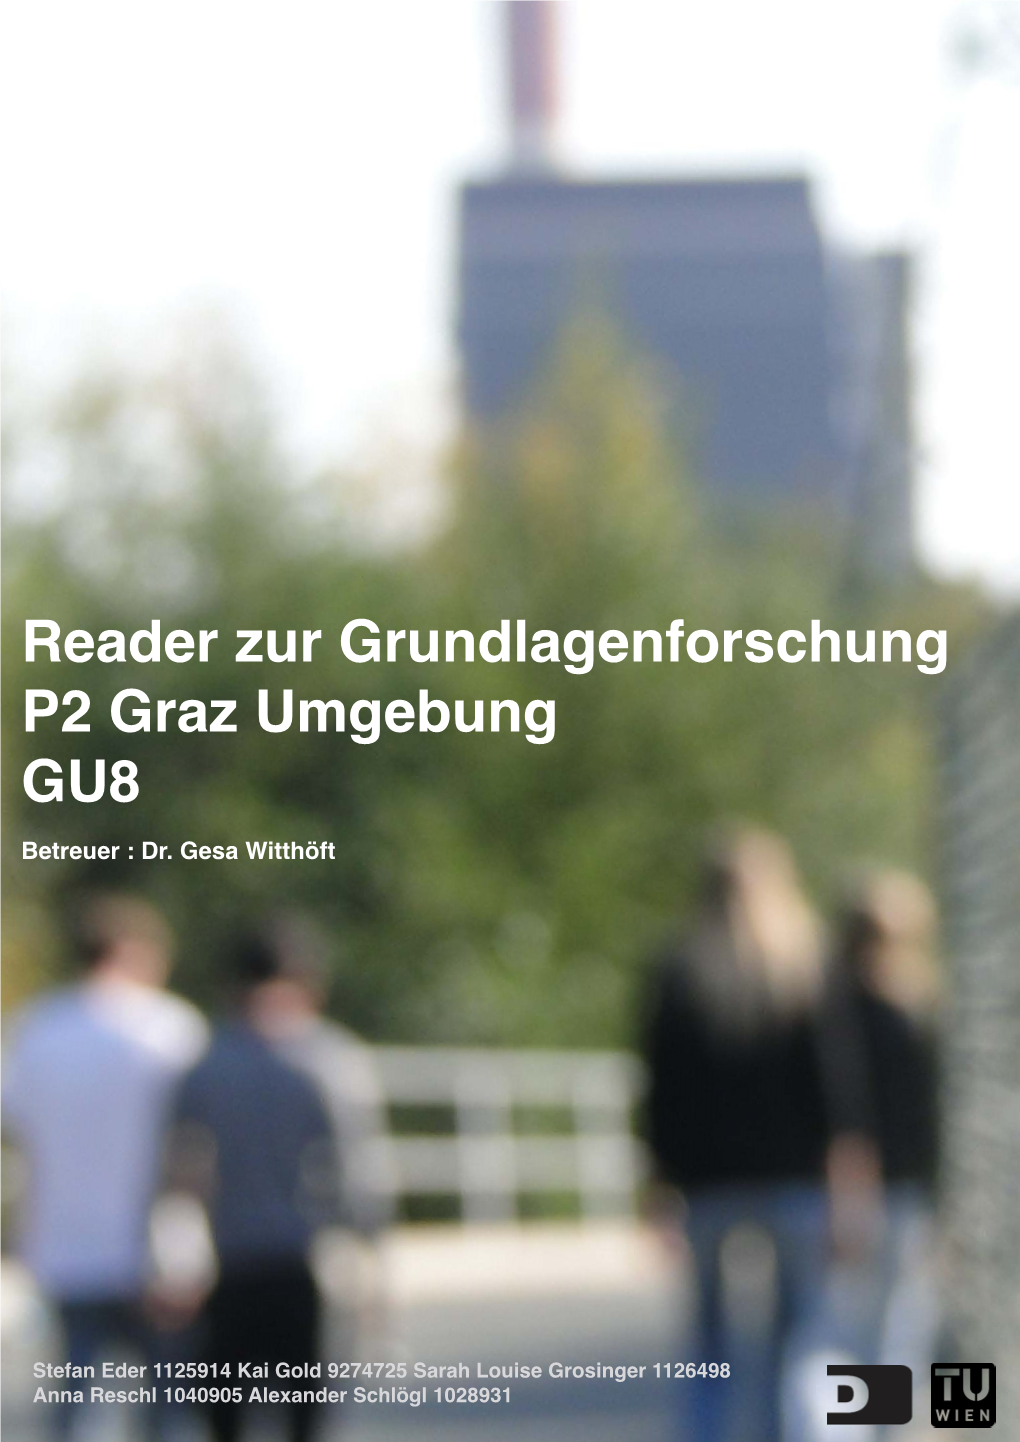 Reader Zur Grundlagenforschung P2 Graz Umgebung GU8 Betreuer : Dr